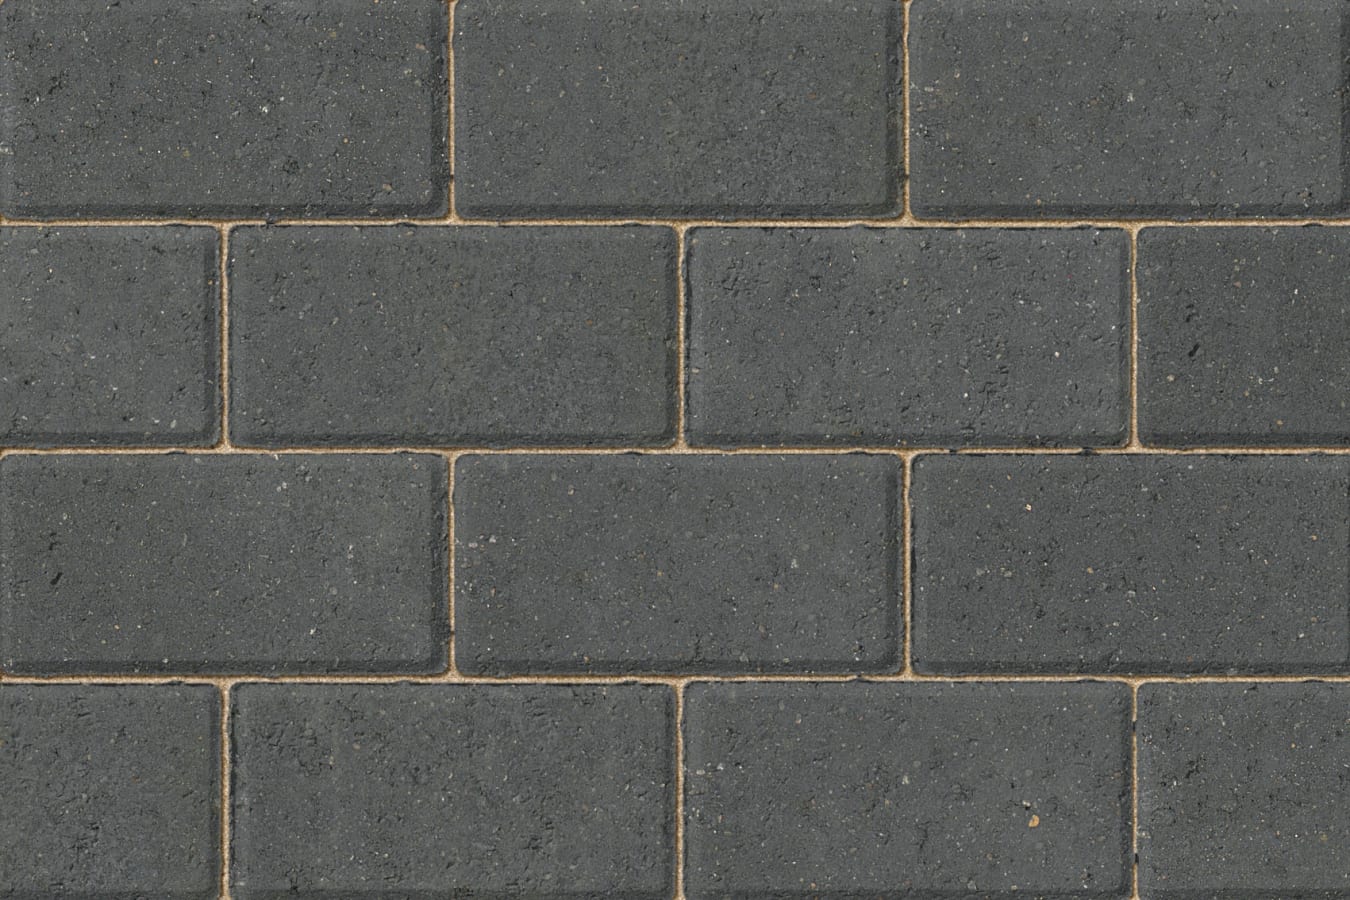 Standard Concrete Block Paving By Marshalls